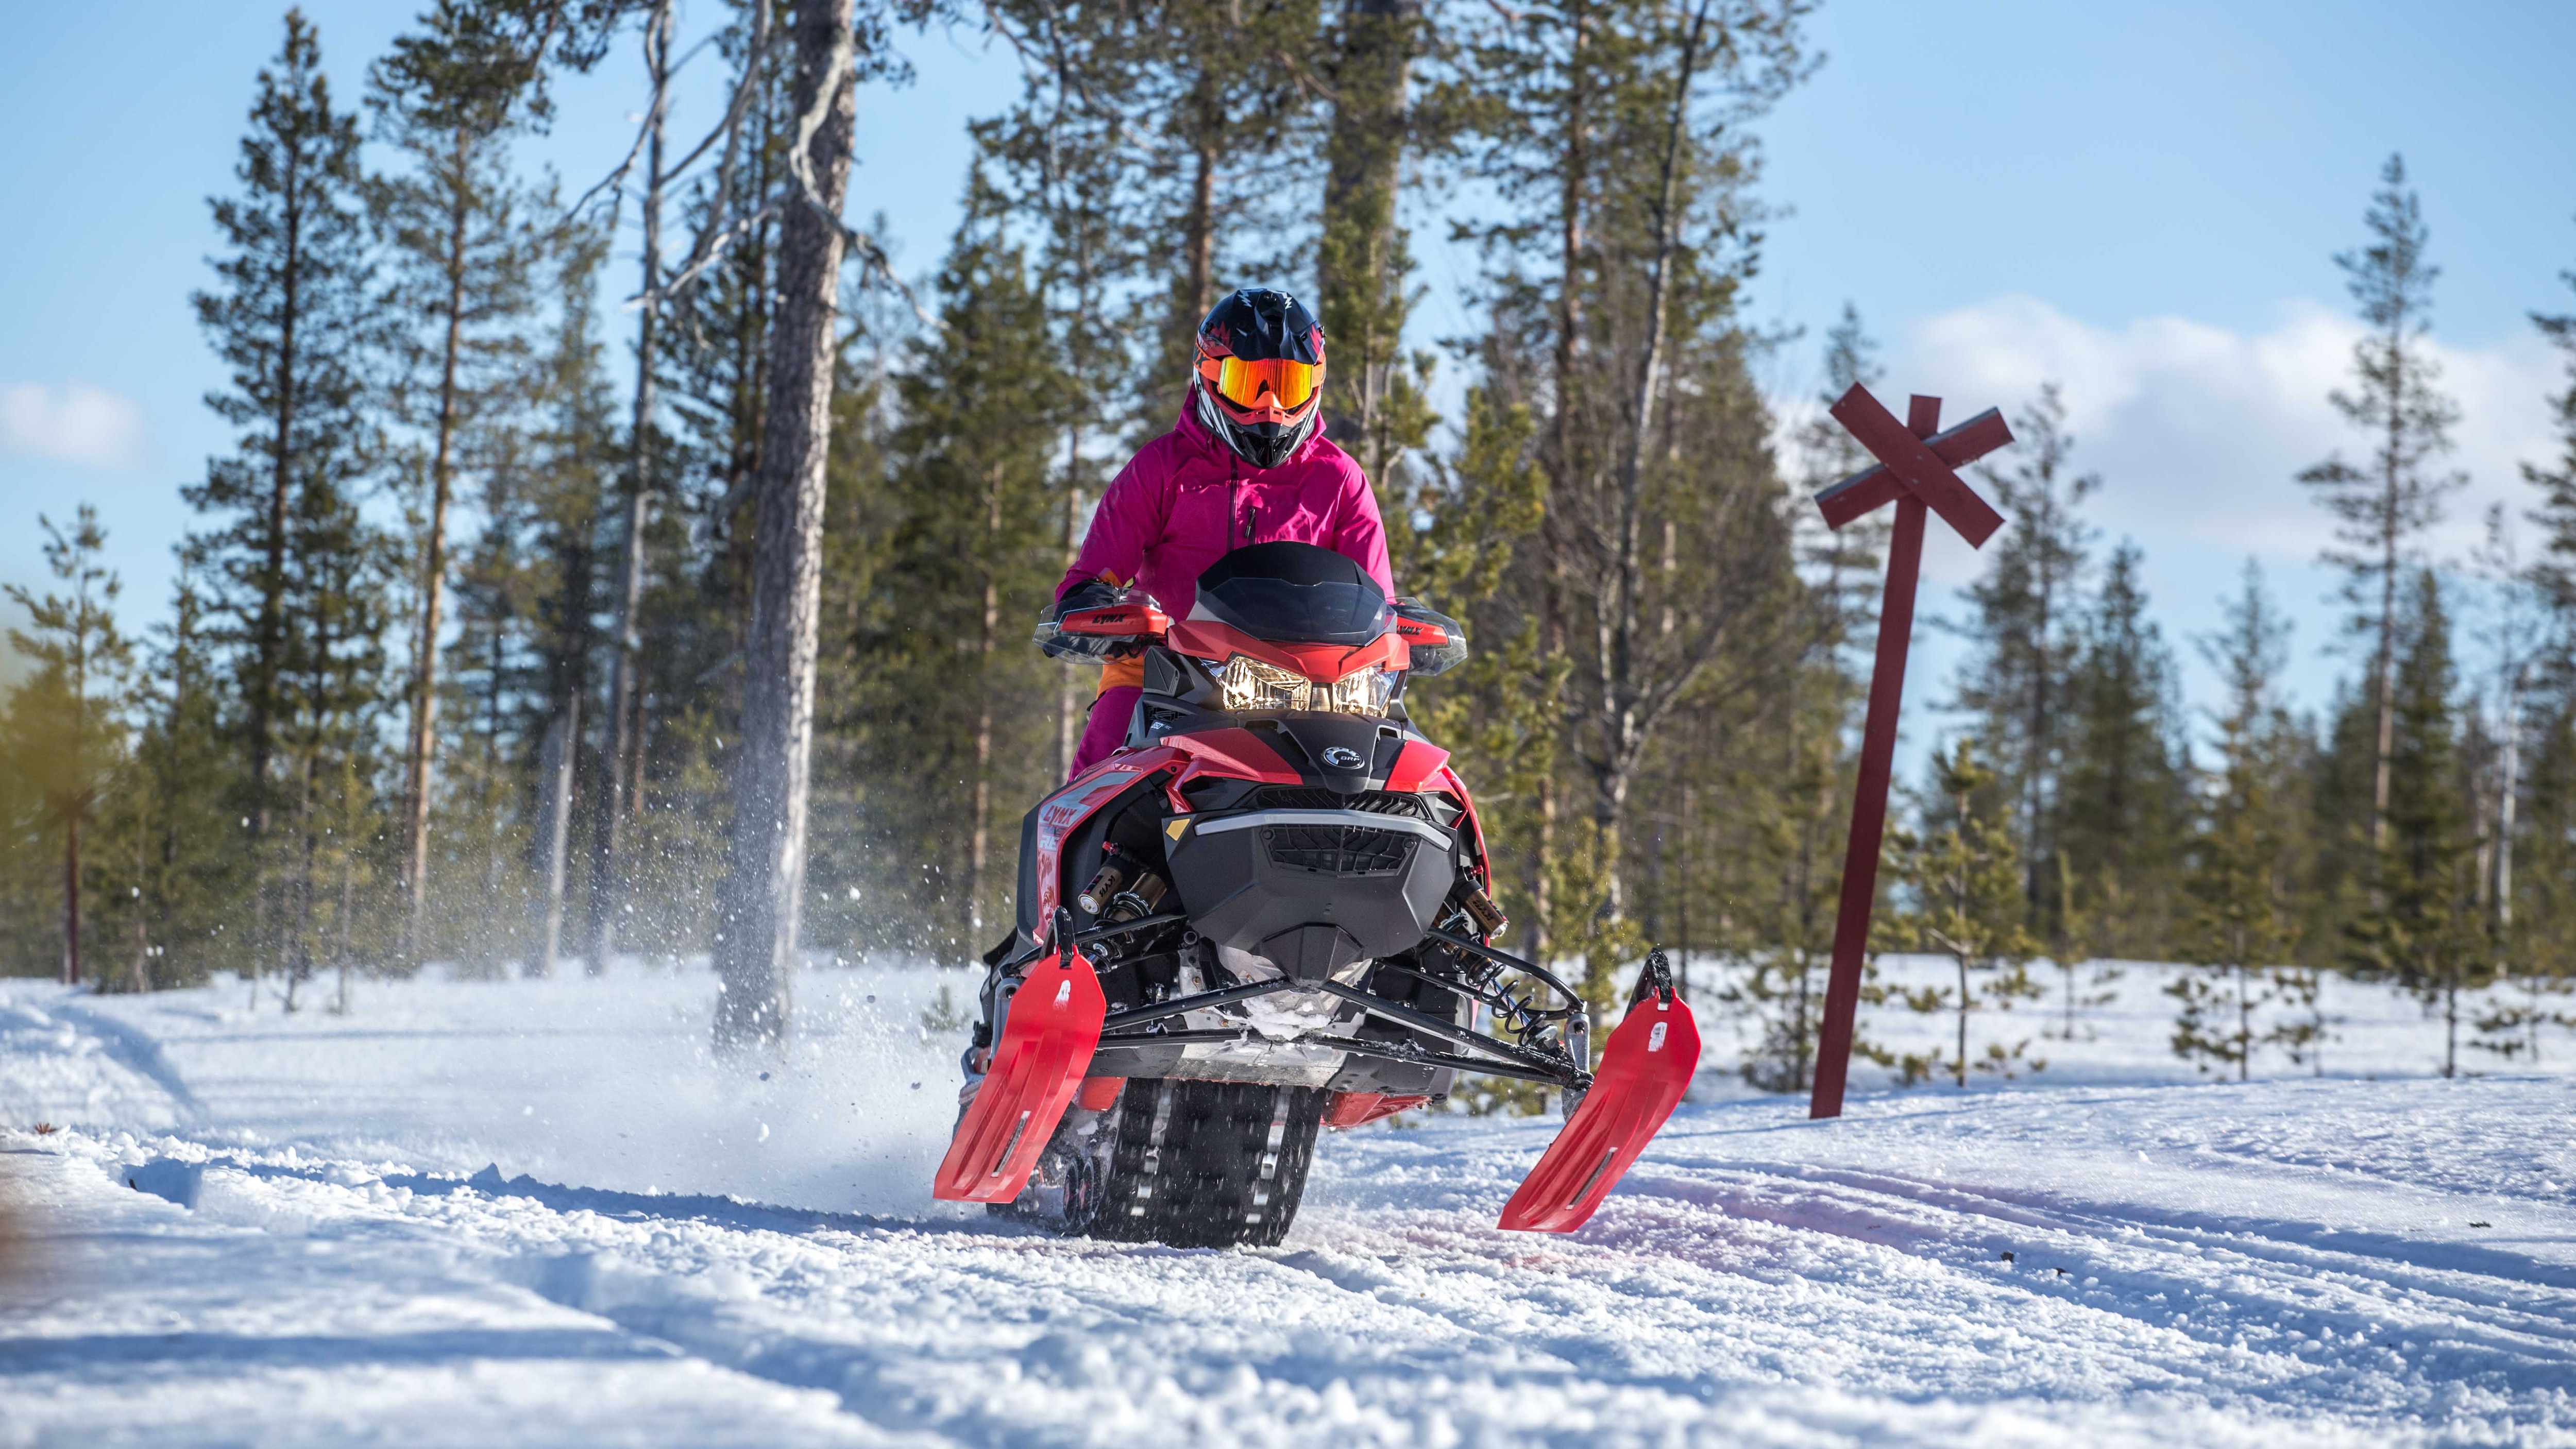 Formula driver Emma Kimiläinen riding snowmobile in Northern Finland